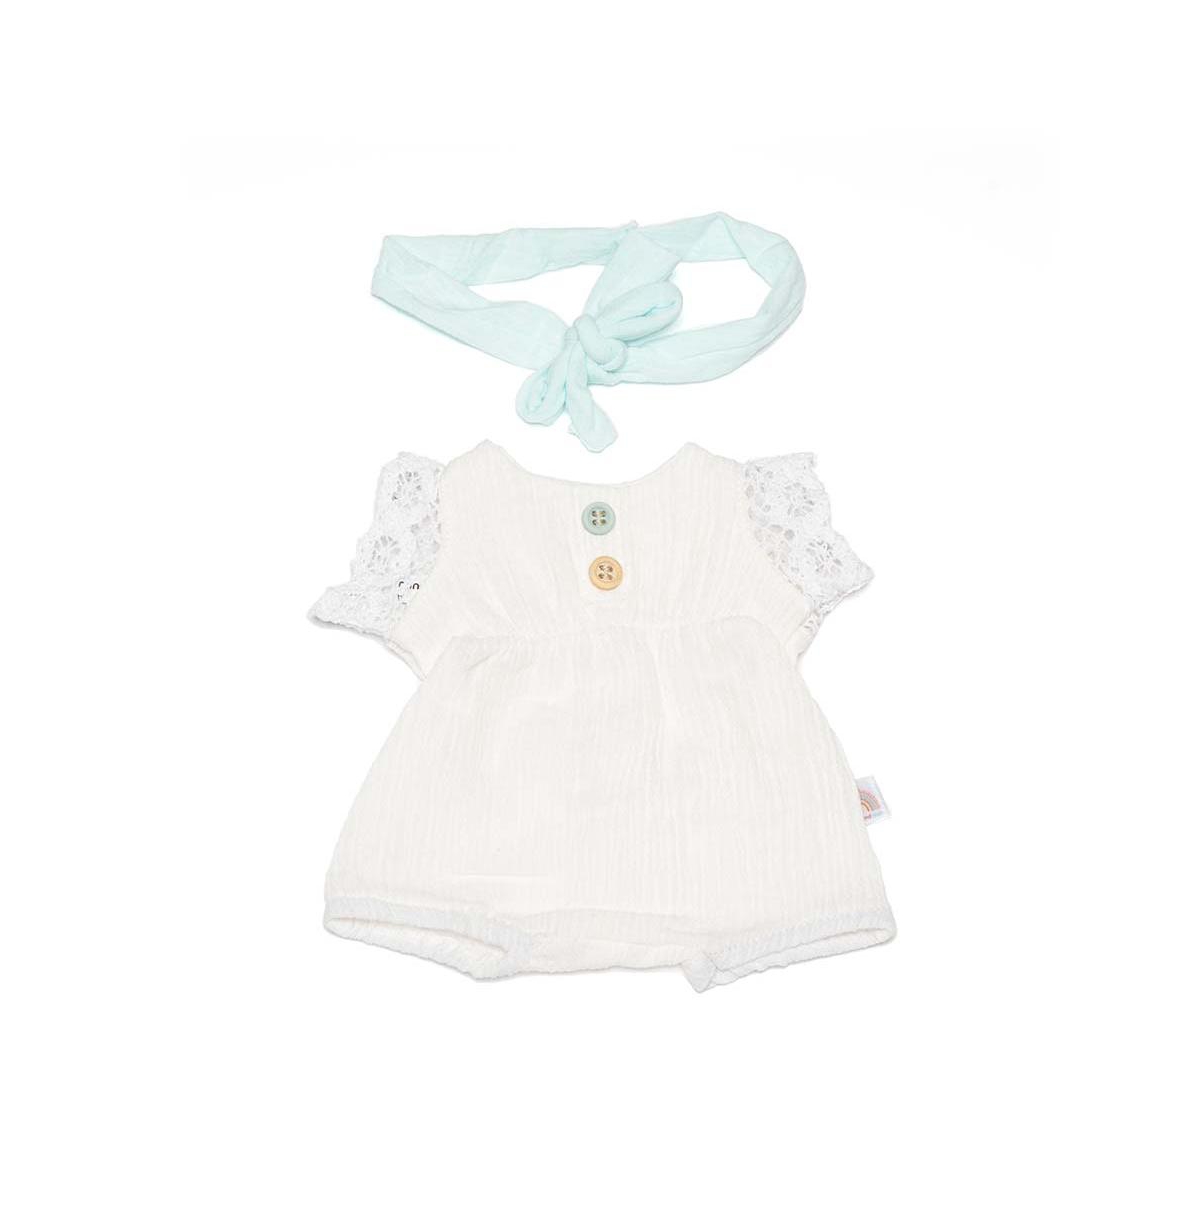 Miniland Sea 15" Girl Clothing Toy Set In White